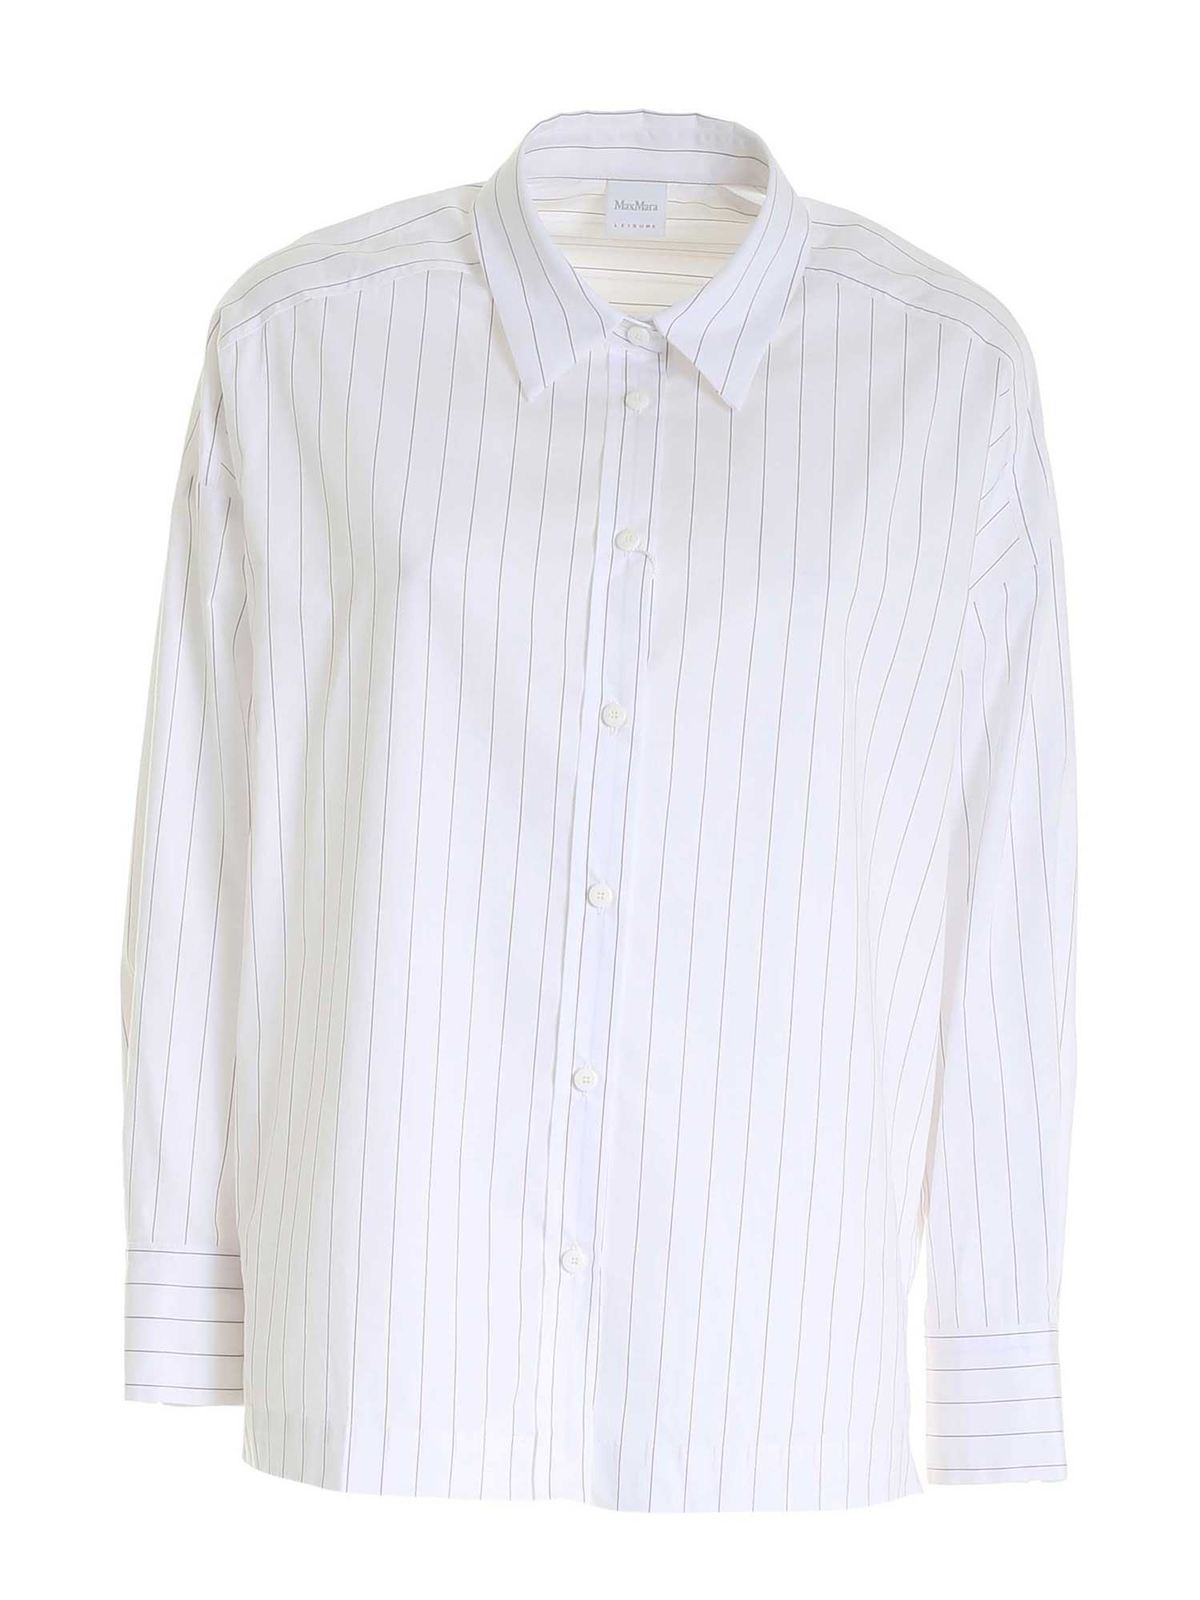 Shirts Max Mara - Esopo shirt in white - 31110216600003 | iKRIX.com